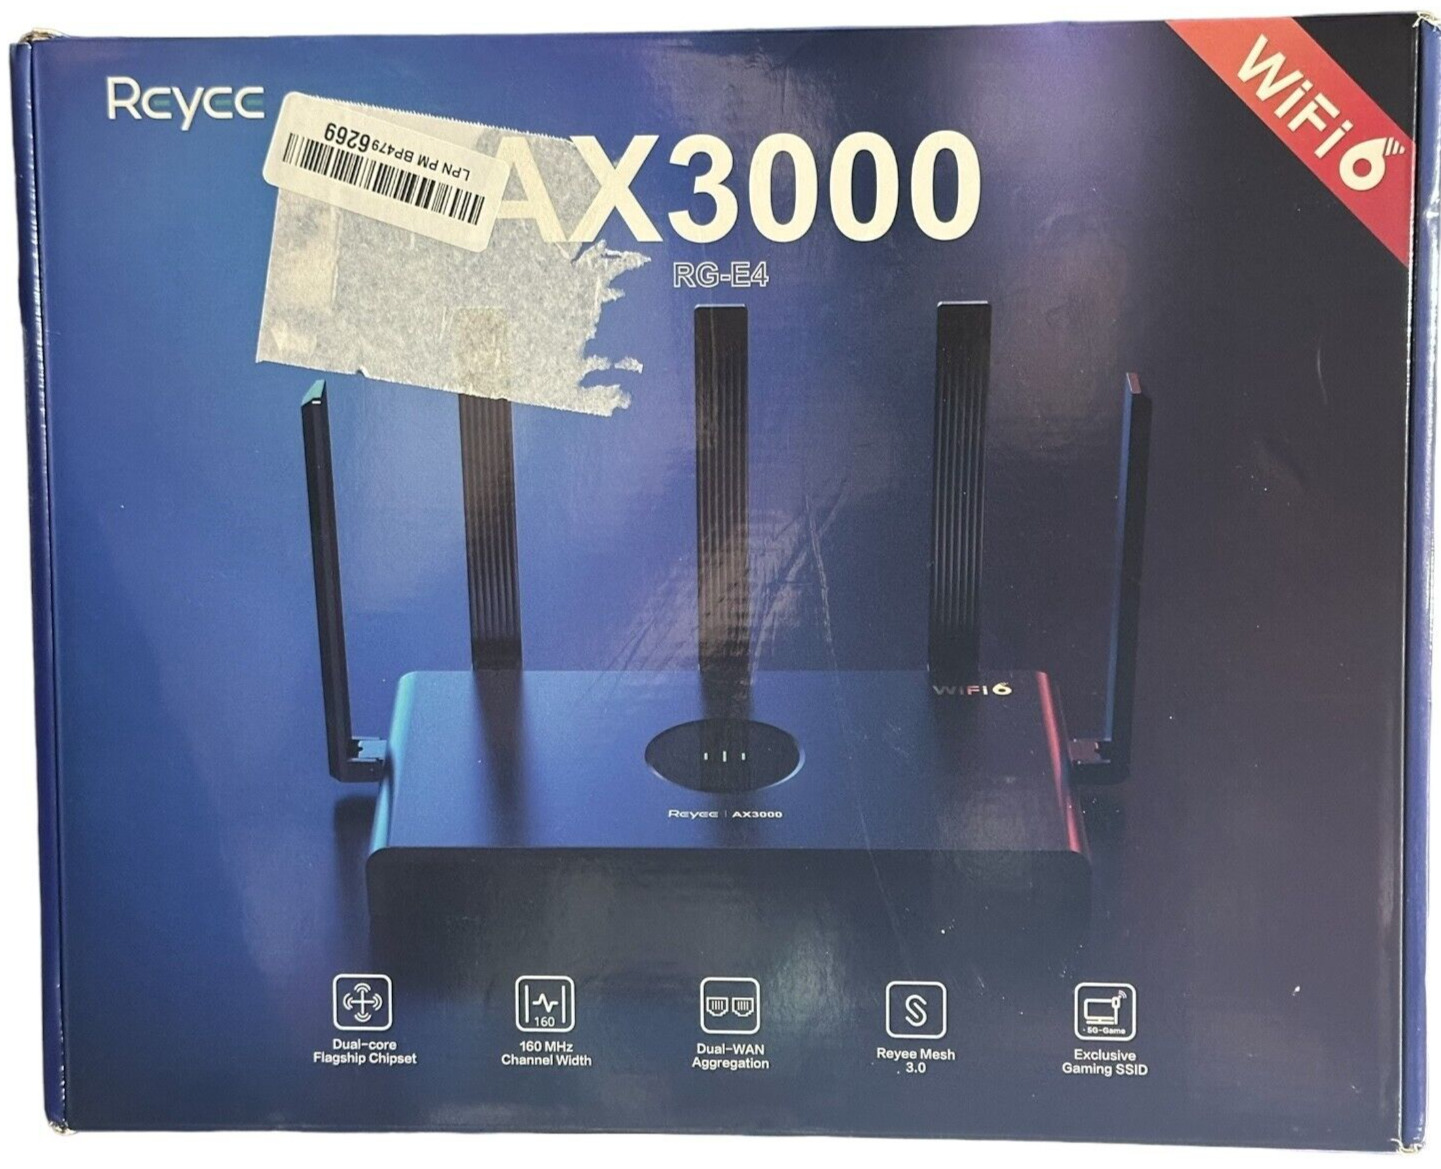 Reyee Dual Band Wi-Fi 6 Router AX3000 (RG-E4) - 3000 SqFt, Coverage, Gigabit WAN